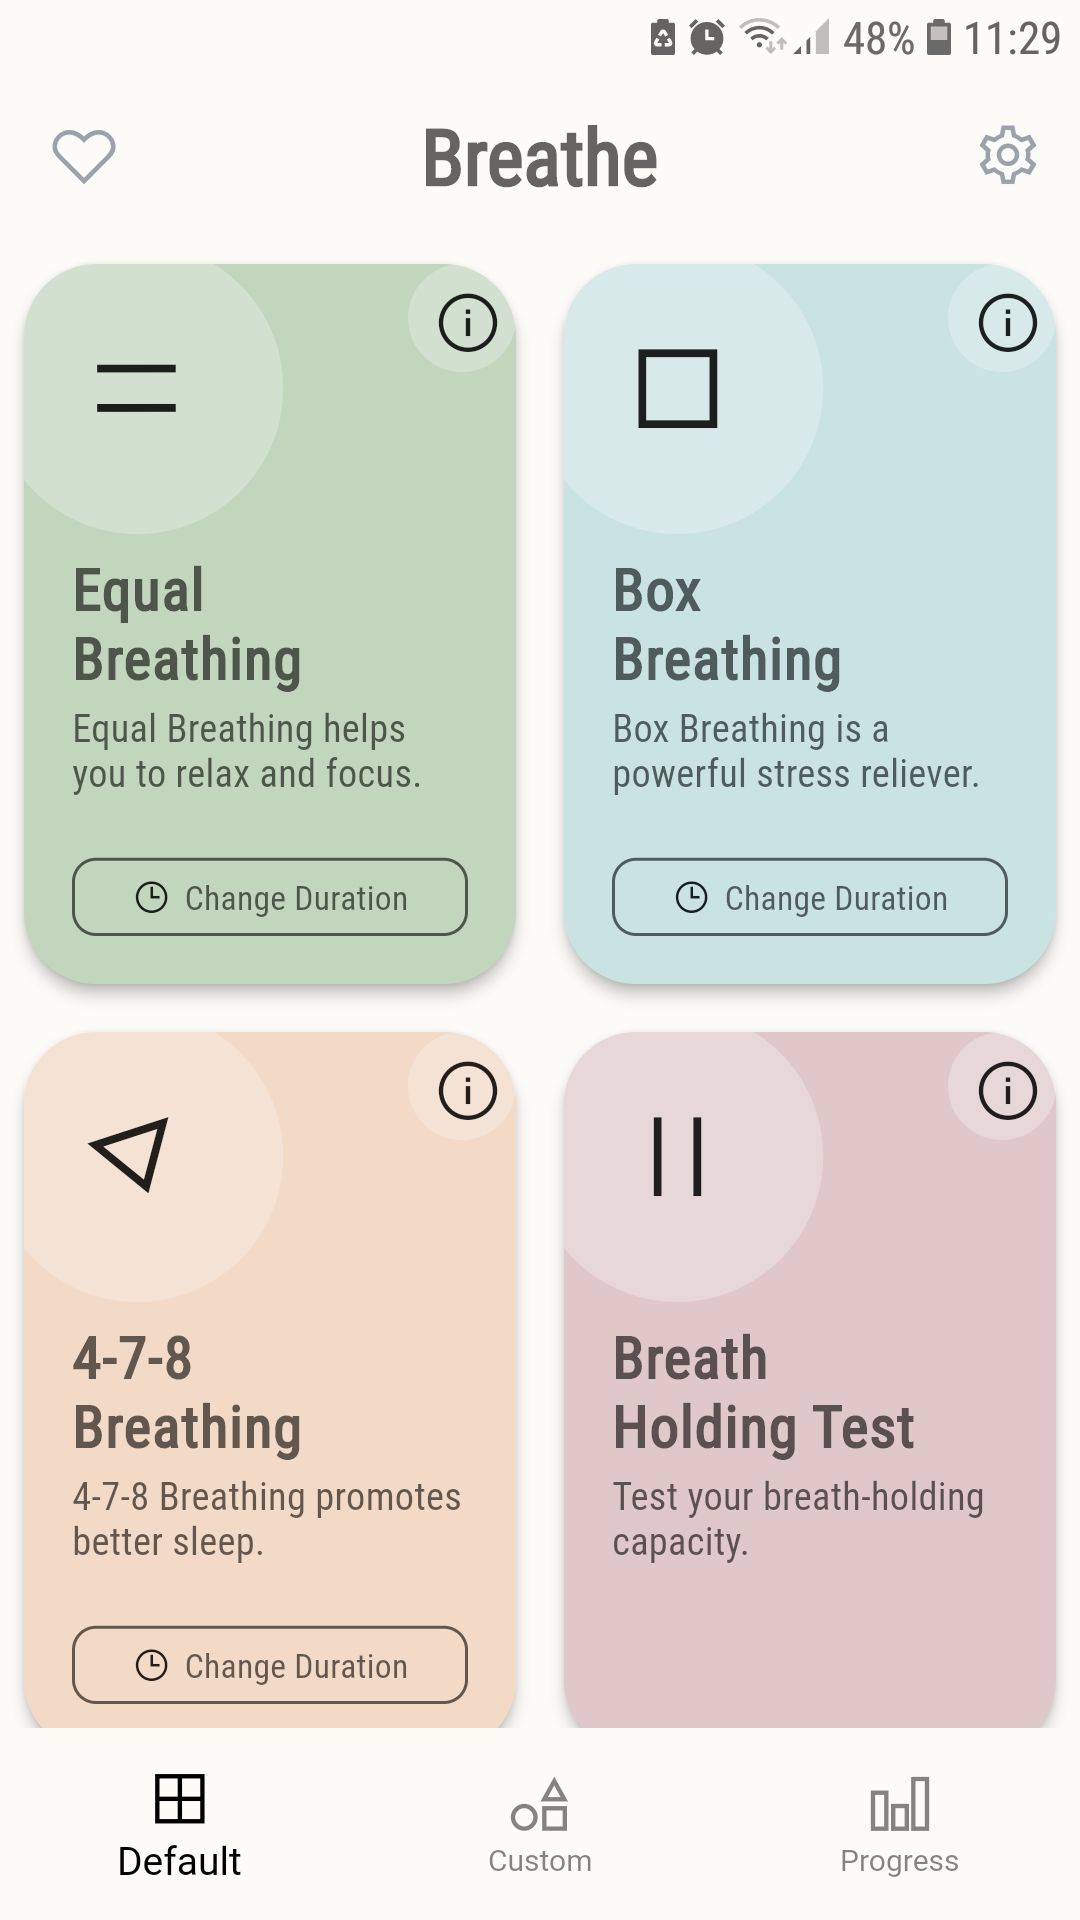 Breathe breathwork mobile app breathing techniques